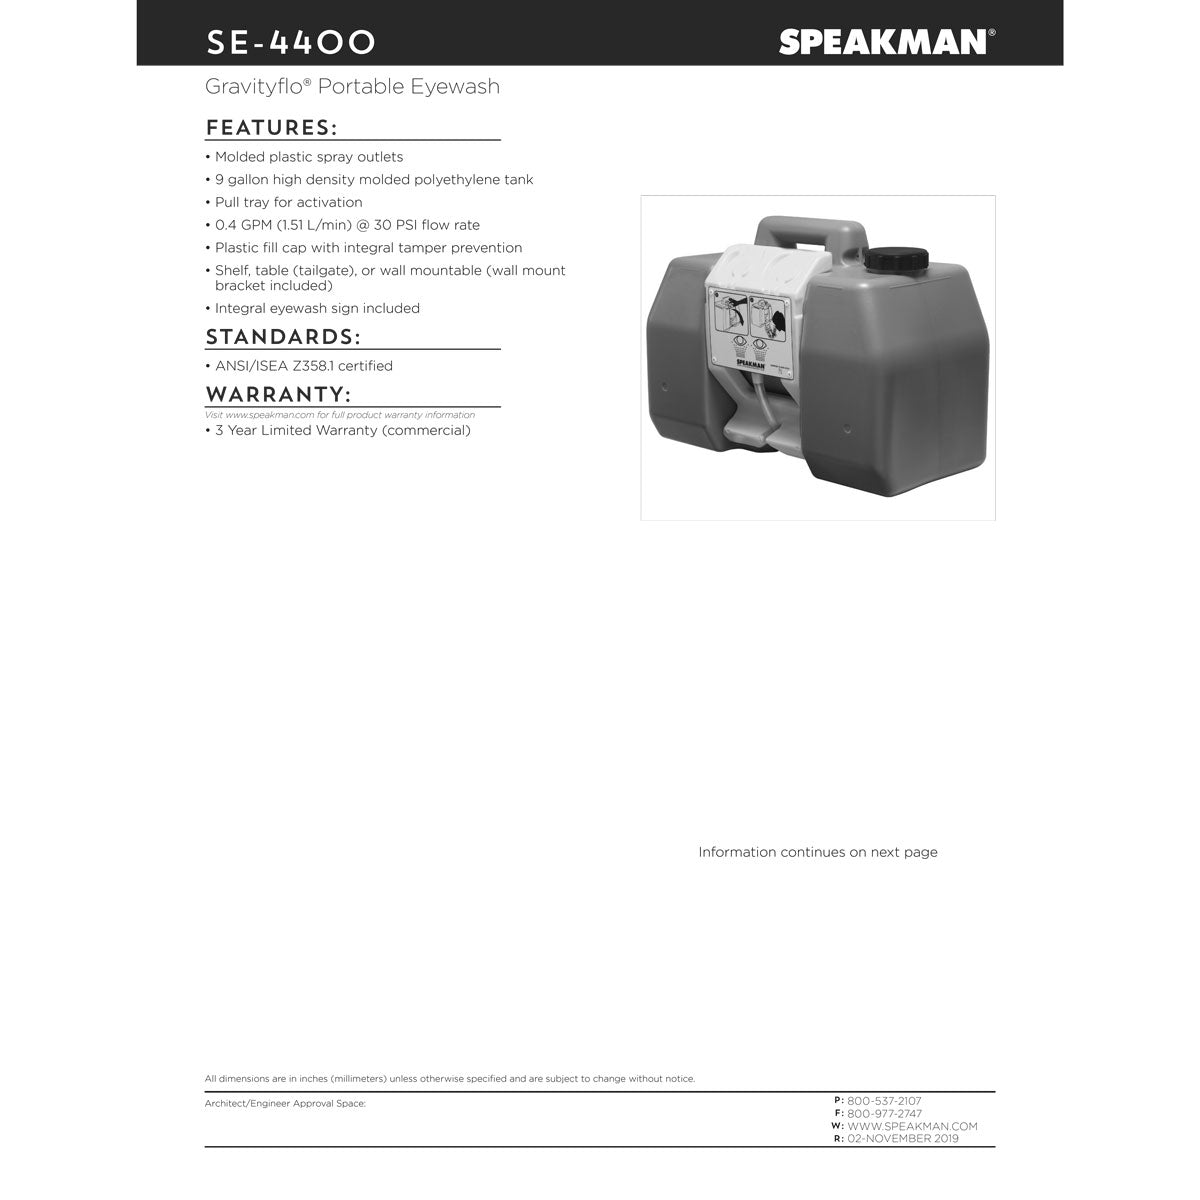 Speakman SE-4400 GravityFlo 9 Gallon Portable Eyewash